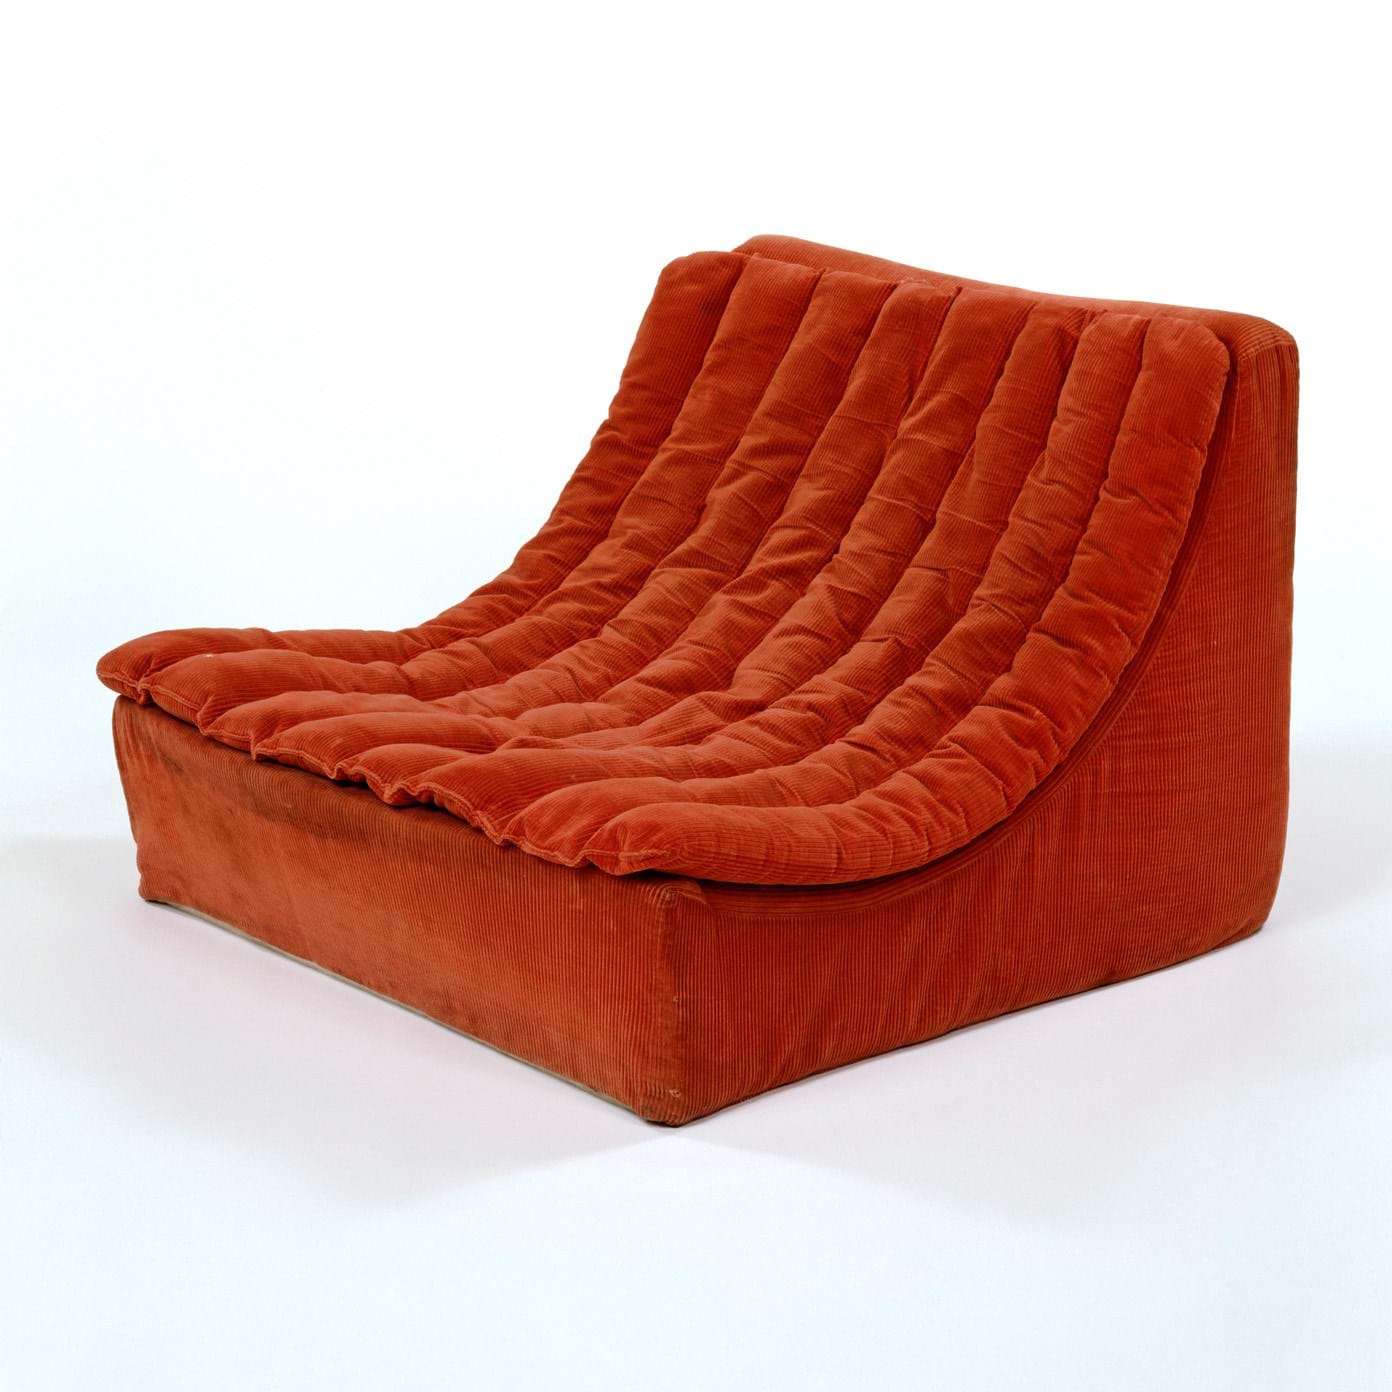 Curved chair in dark orange fabric